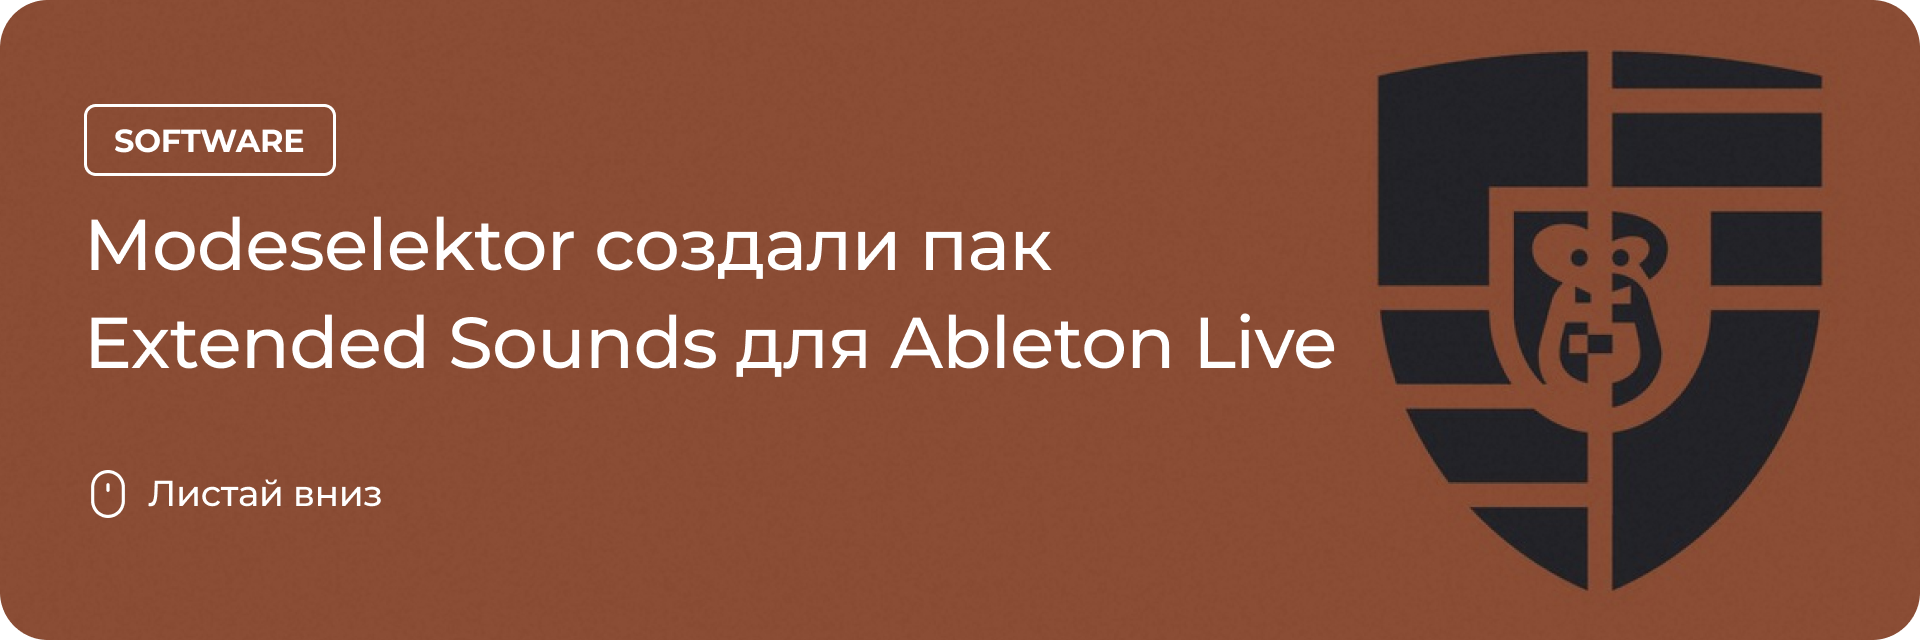 Modeselektor создали пак Extended Sounds для Ableton Live